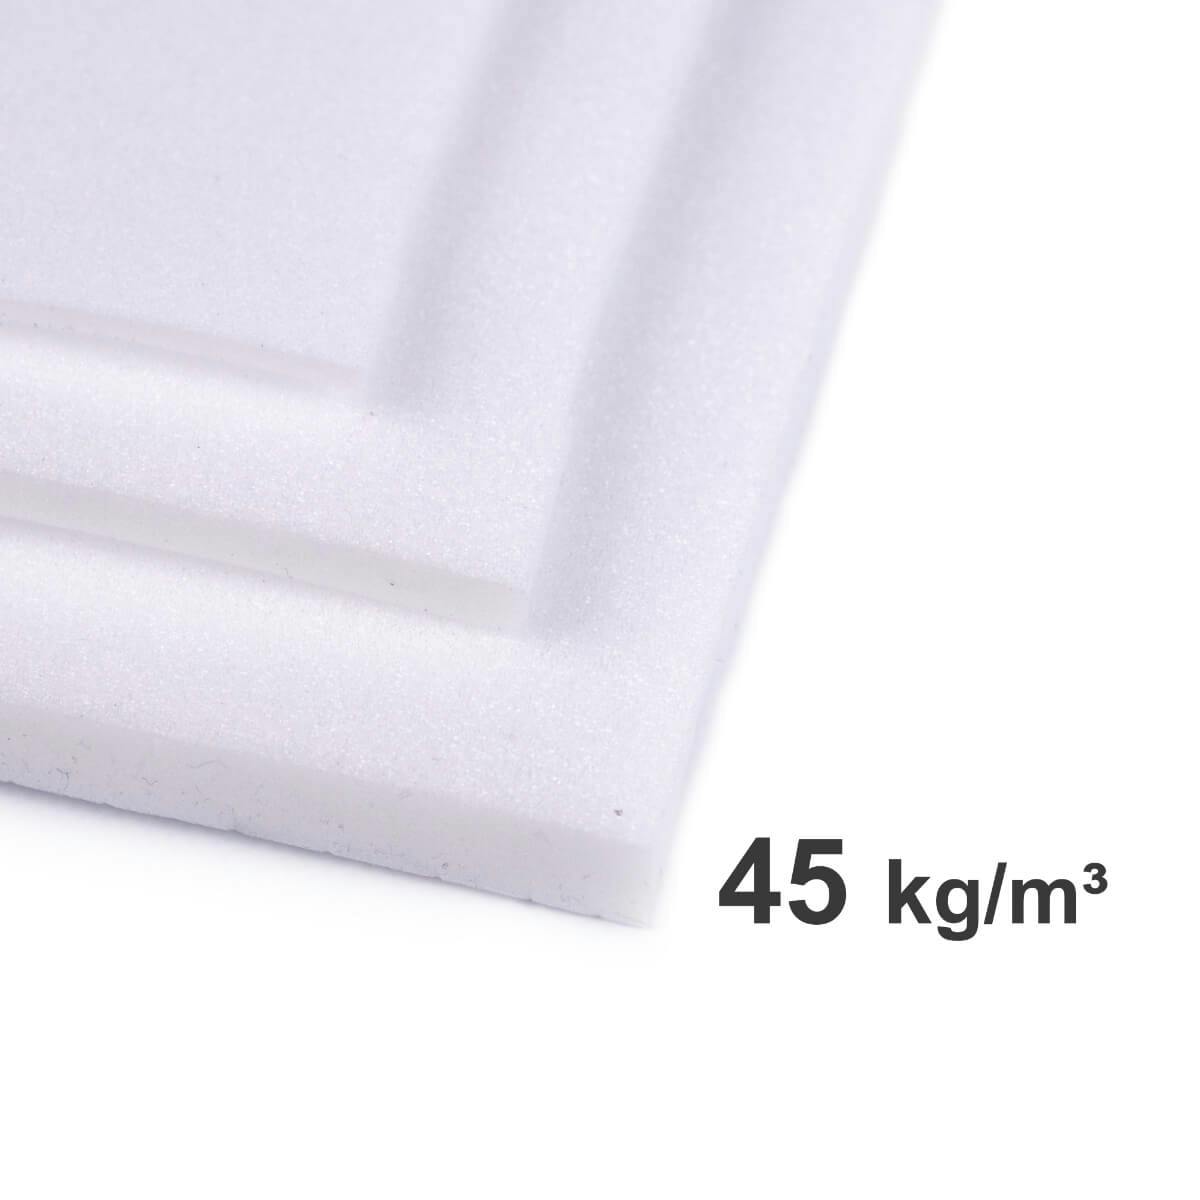 Close-up of a corner of translucent white EVA foams with a density description of 45 kg/m3